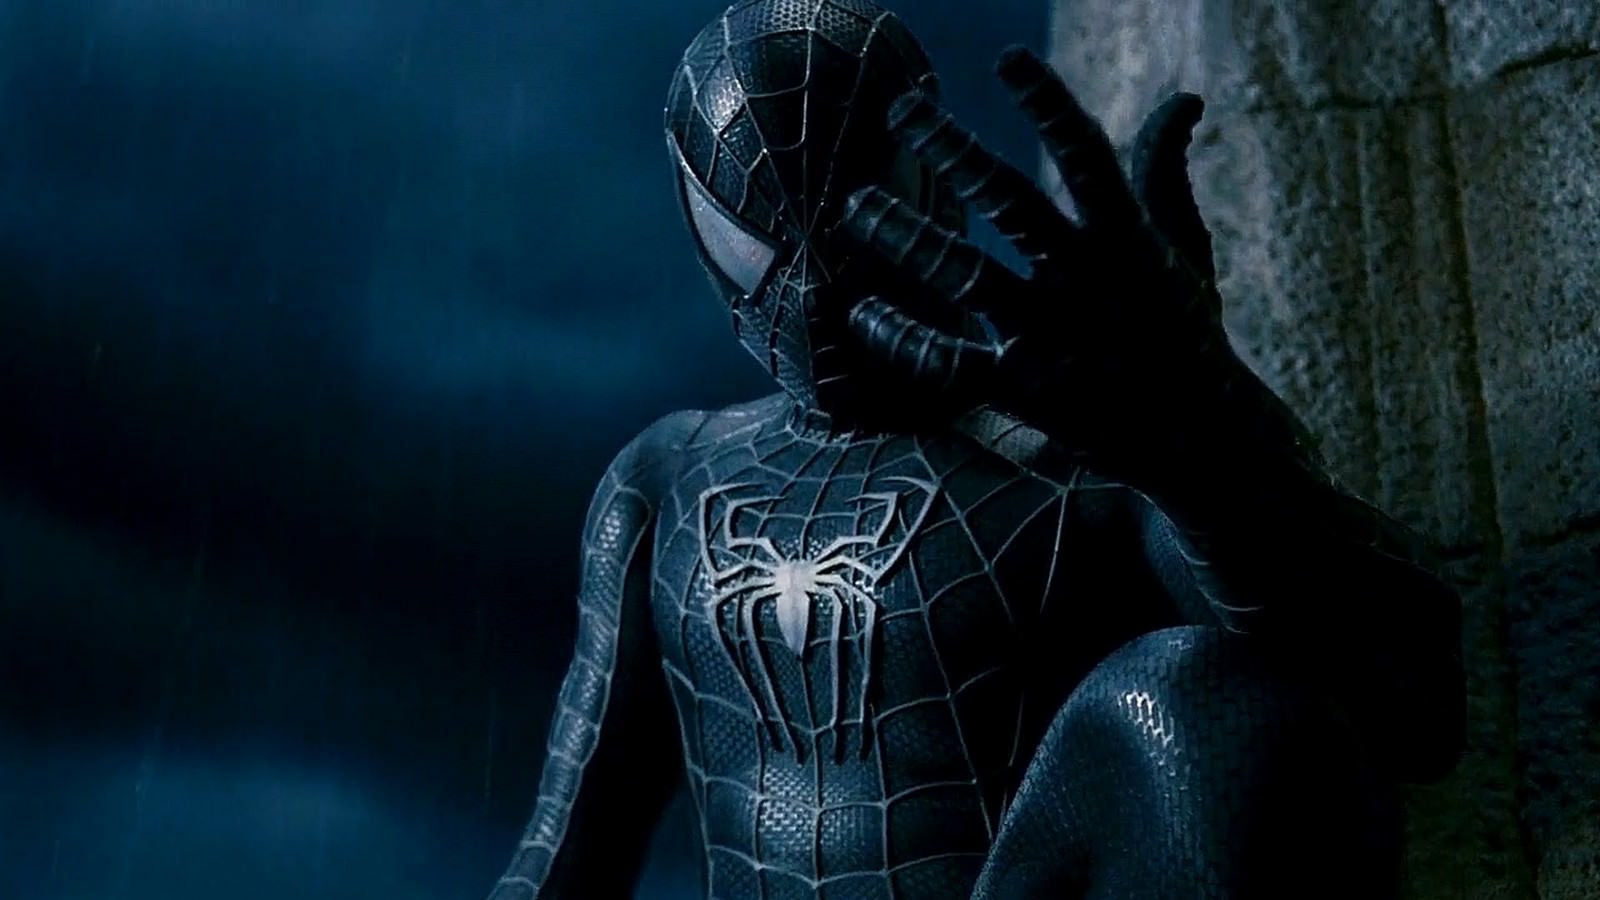 Movie, Spider-Man 3(美國, 2007年) / 蜘蛛人3(台灣) / 蜘蛛侠3(中國) / 蜘蛛俠3(香港), 電影劇照, 角色與演員介紹